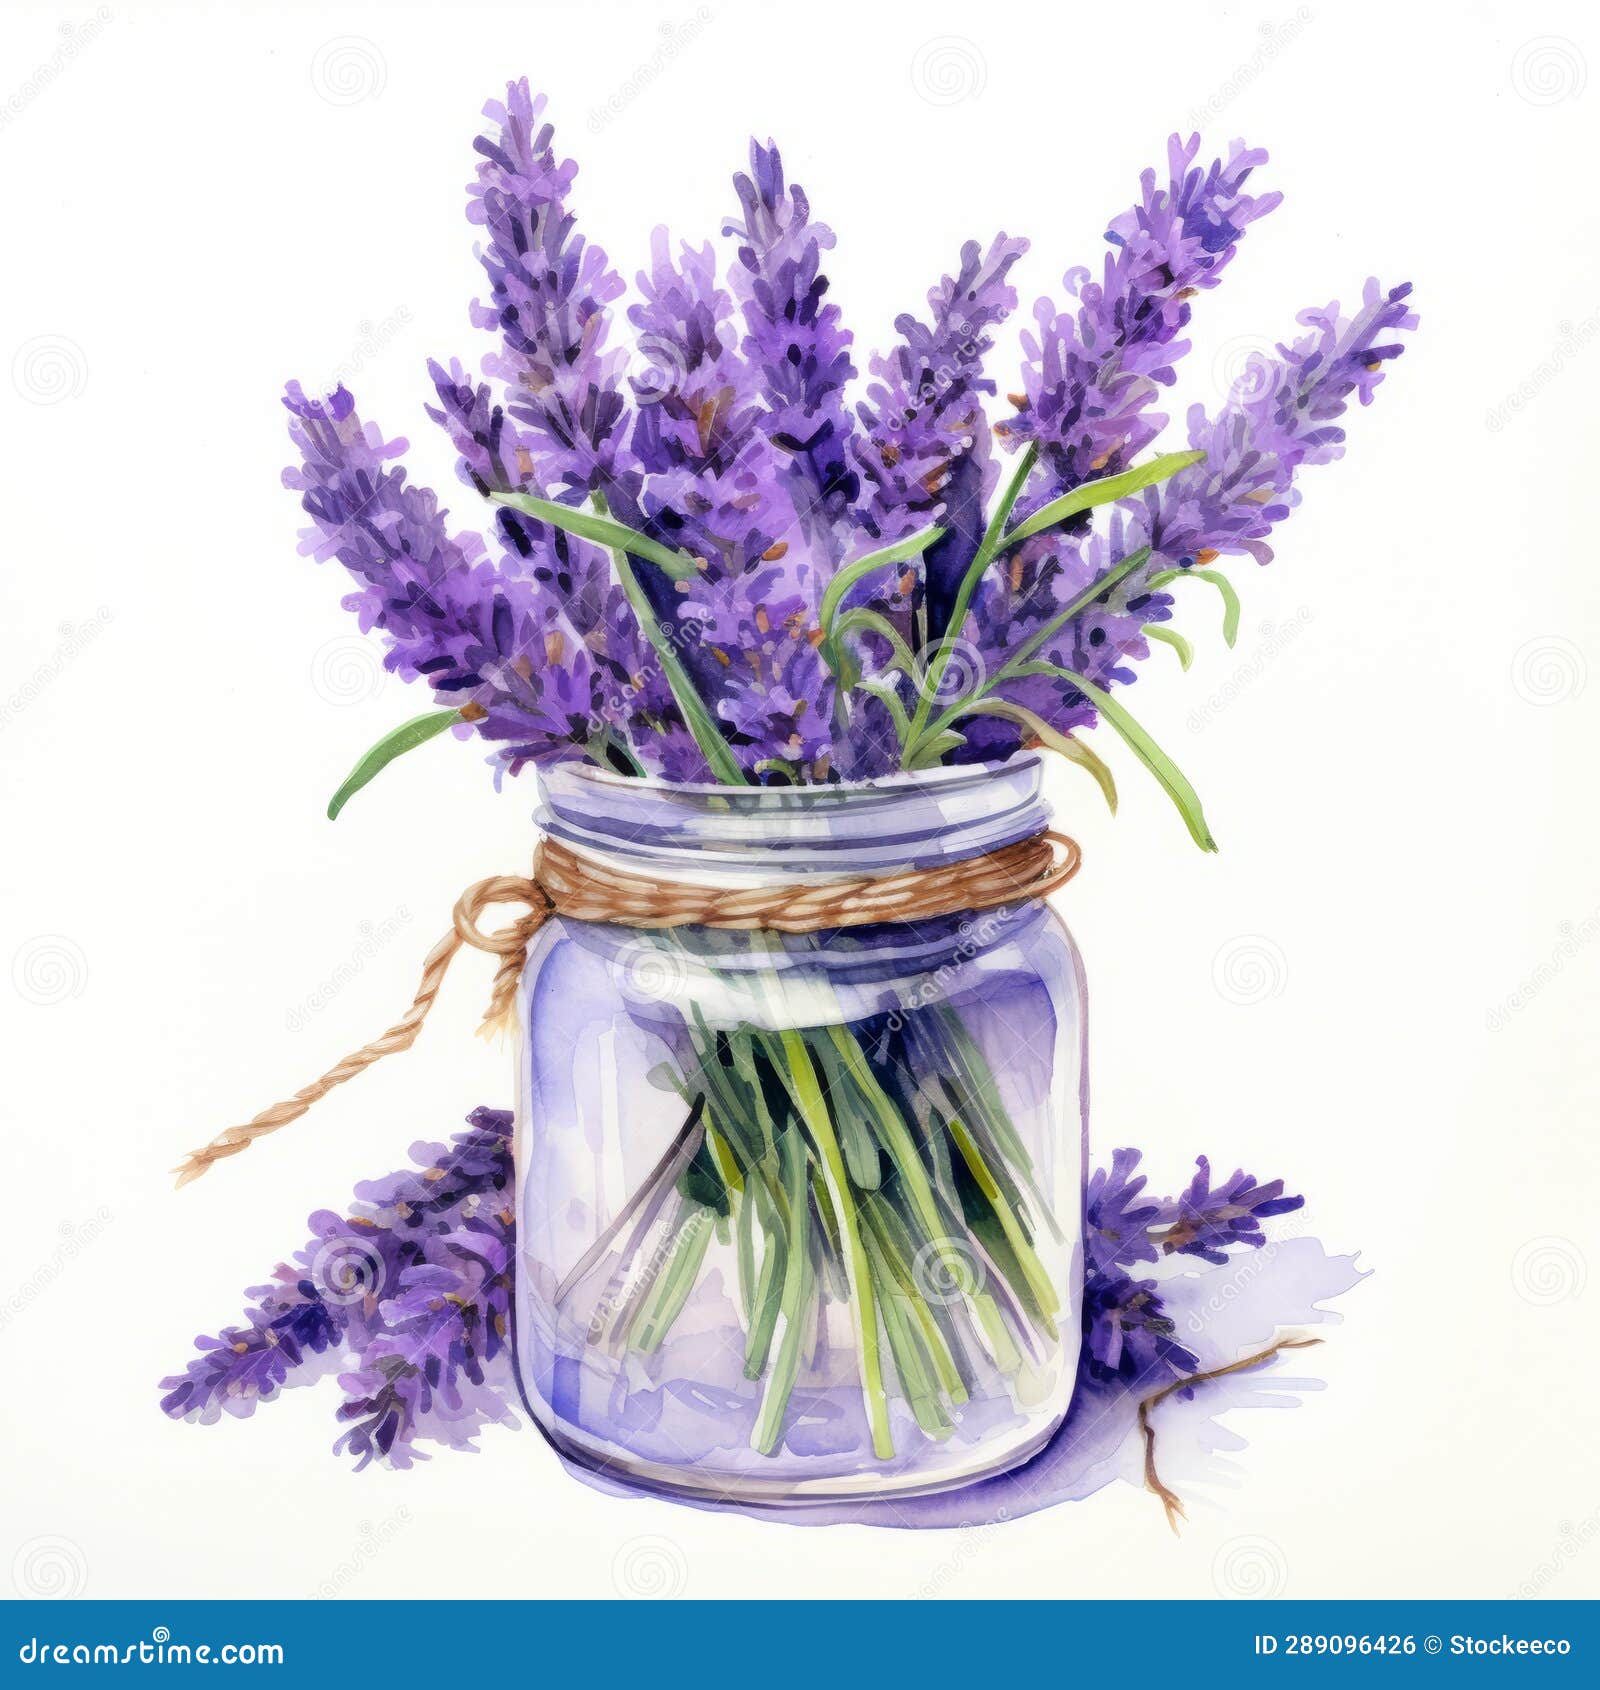 watercolor  of lavender in a mason jar